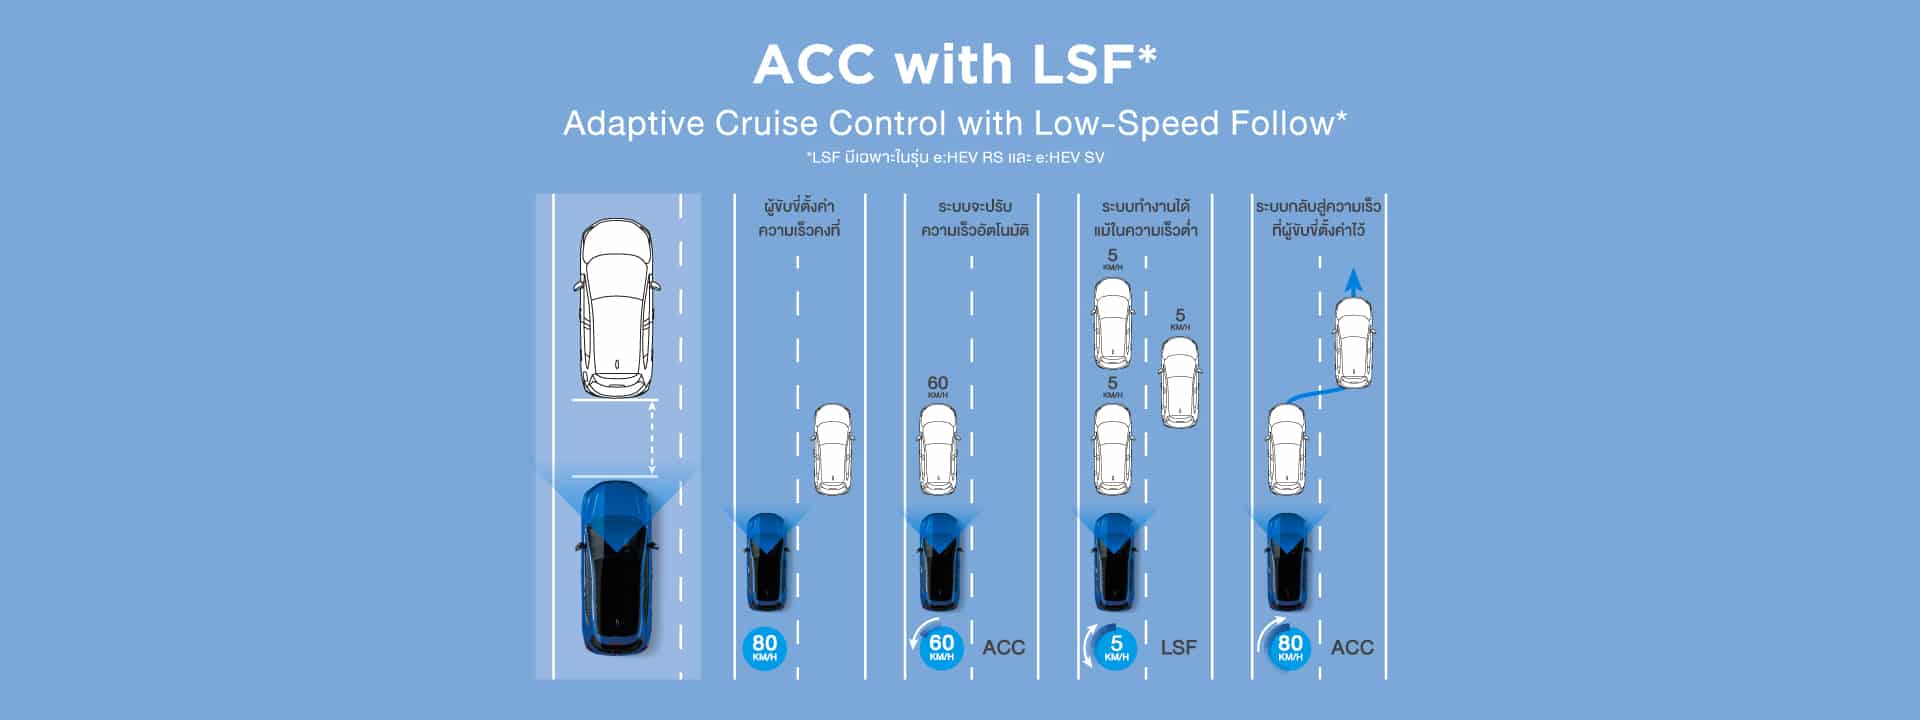 ACC with LSF ระบบควบคุมความเร็วอัตโนมัติ และ ปรับความเร็วตามรถยนต์คันหน้า โดยระบบจะควบคุมความเร็วตามผู้ใช้งานกำหนดไว้ และจะปรับความเร็วตามคันหน้าเพื่อรักษาระยะห่างให้ปลอดภัย มีเฉพาะรุ่น e:HEV RS และ e:HEV SV